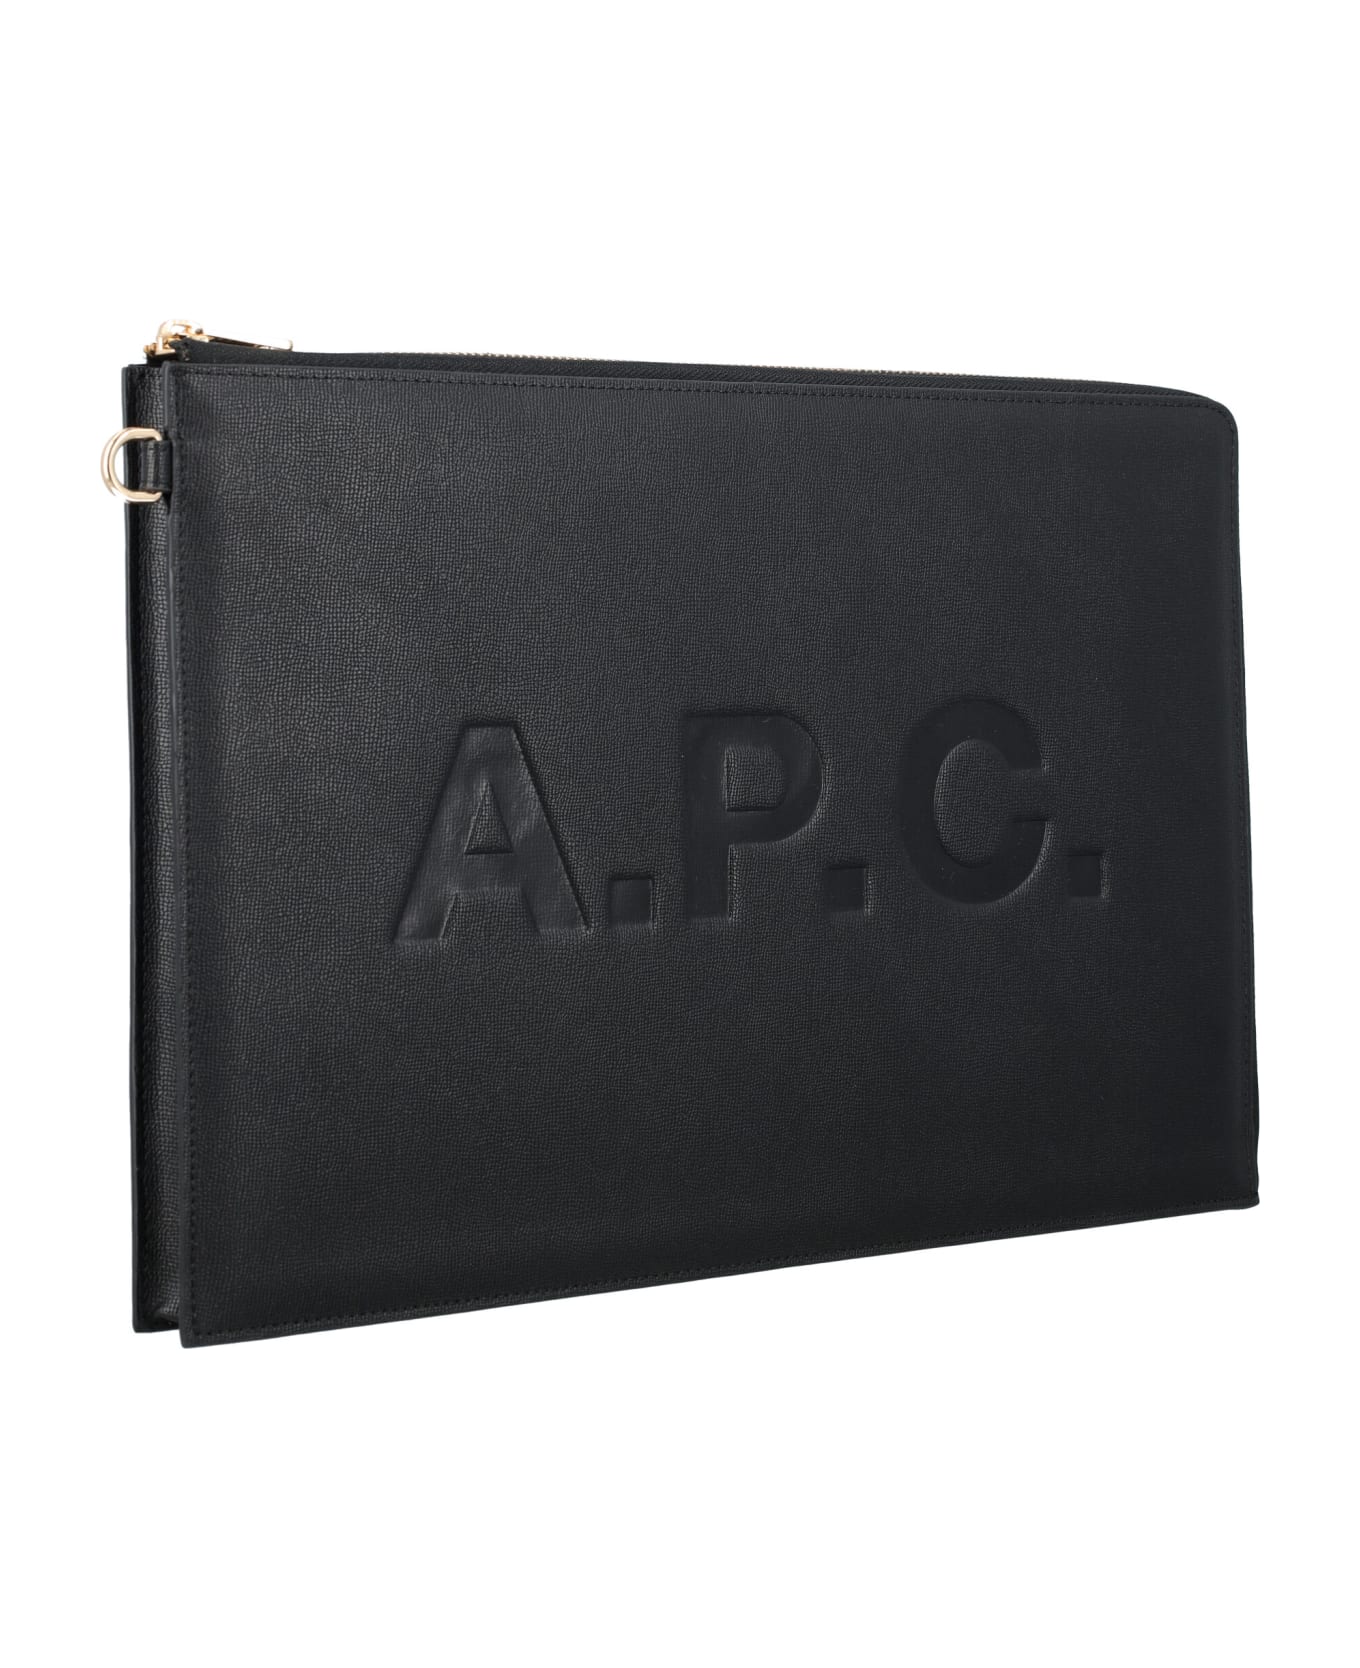 A.P.C. Briefcase With Logo - BLACK